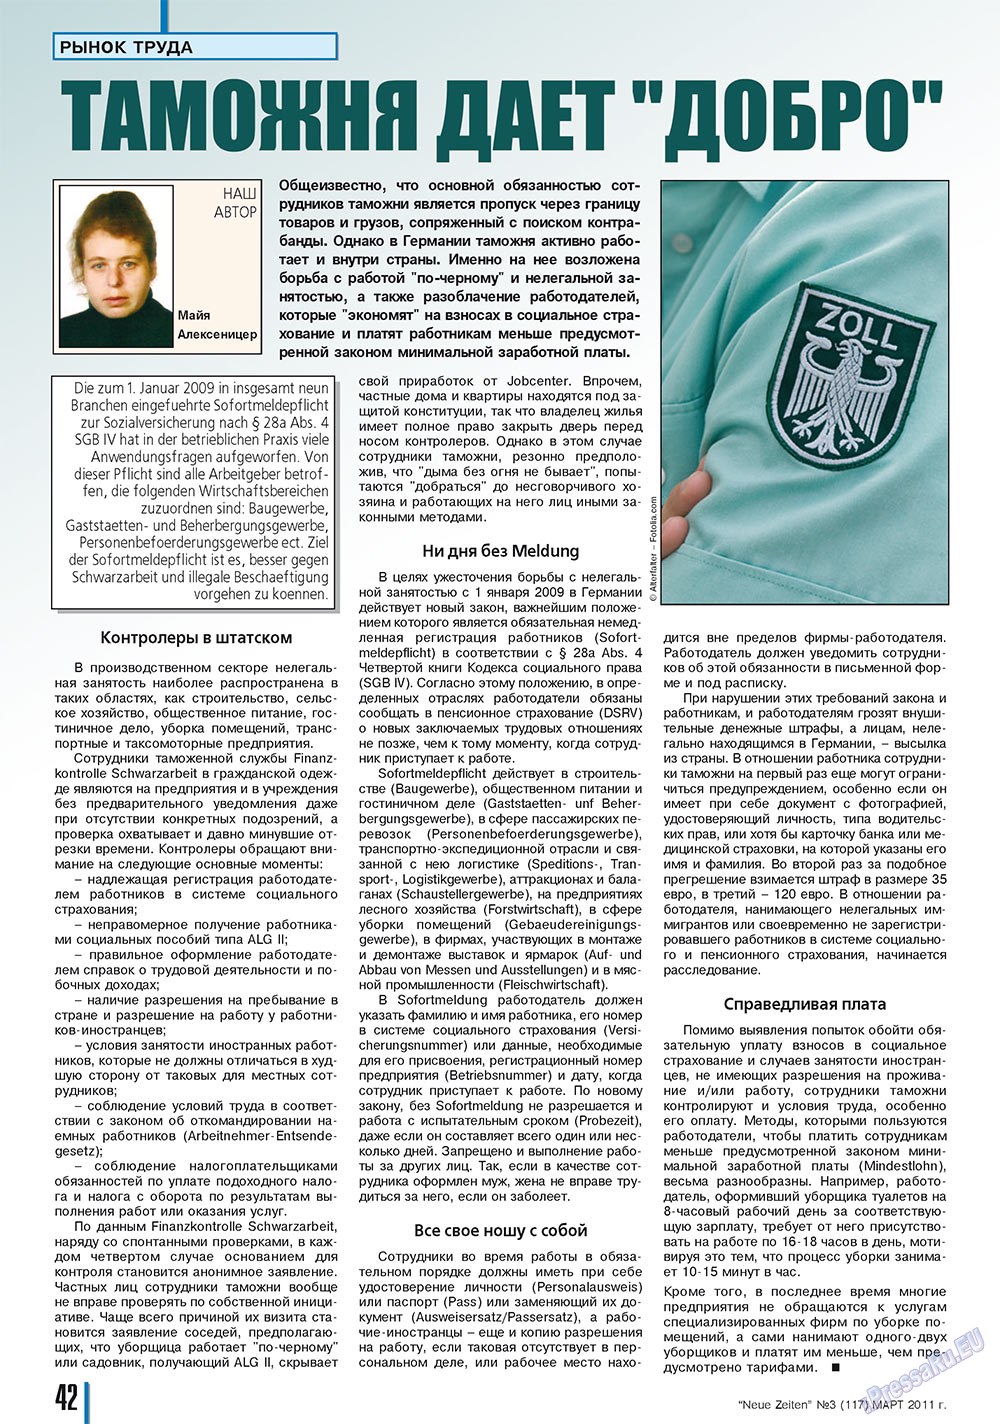 Neue Zeiten (журнал). 2011 год, номер 3, стр. 42